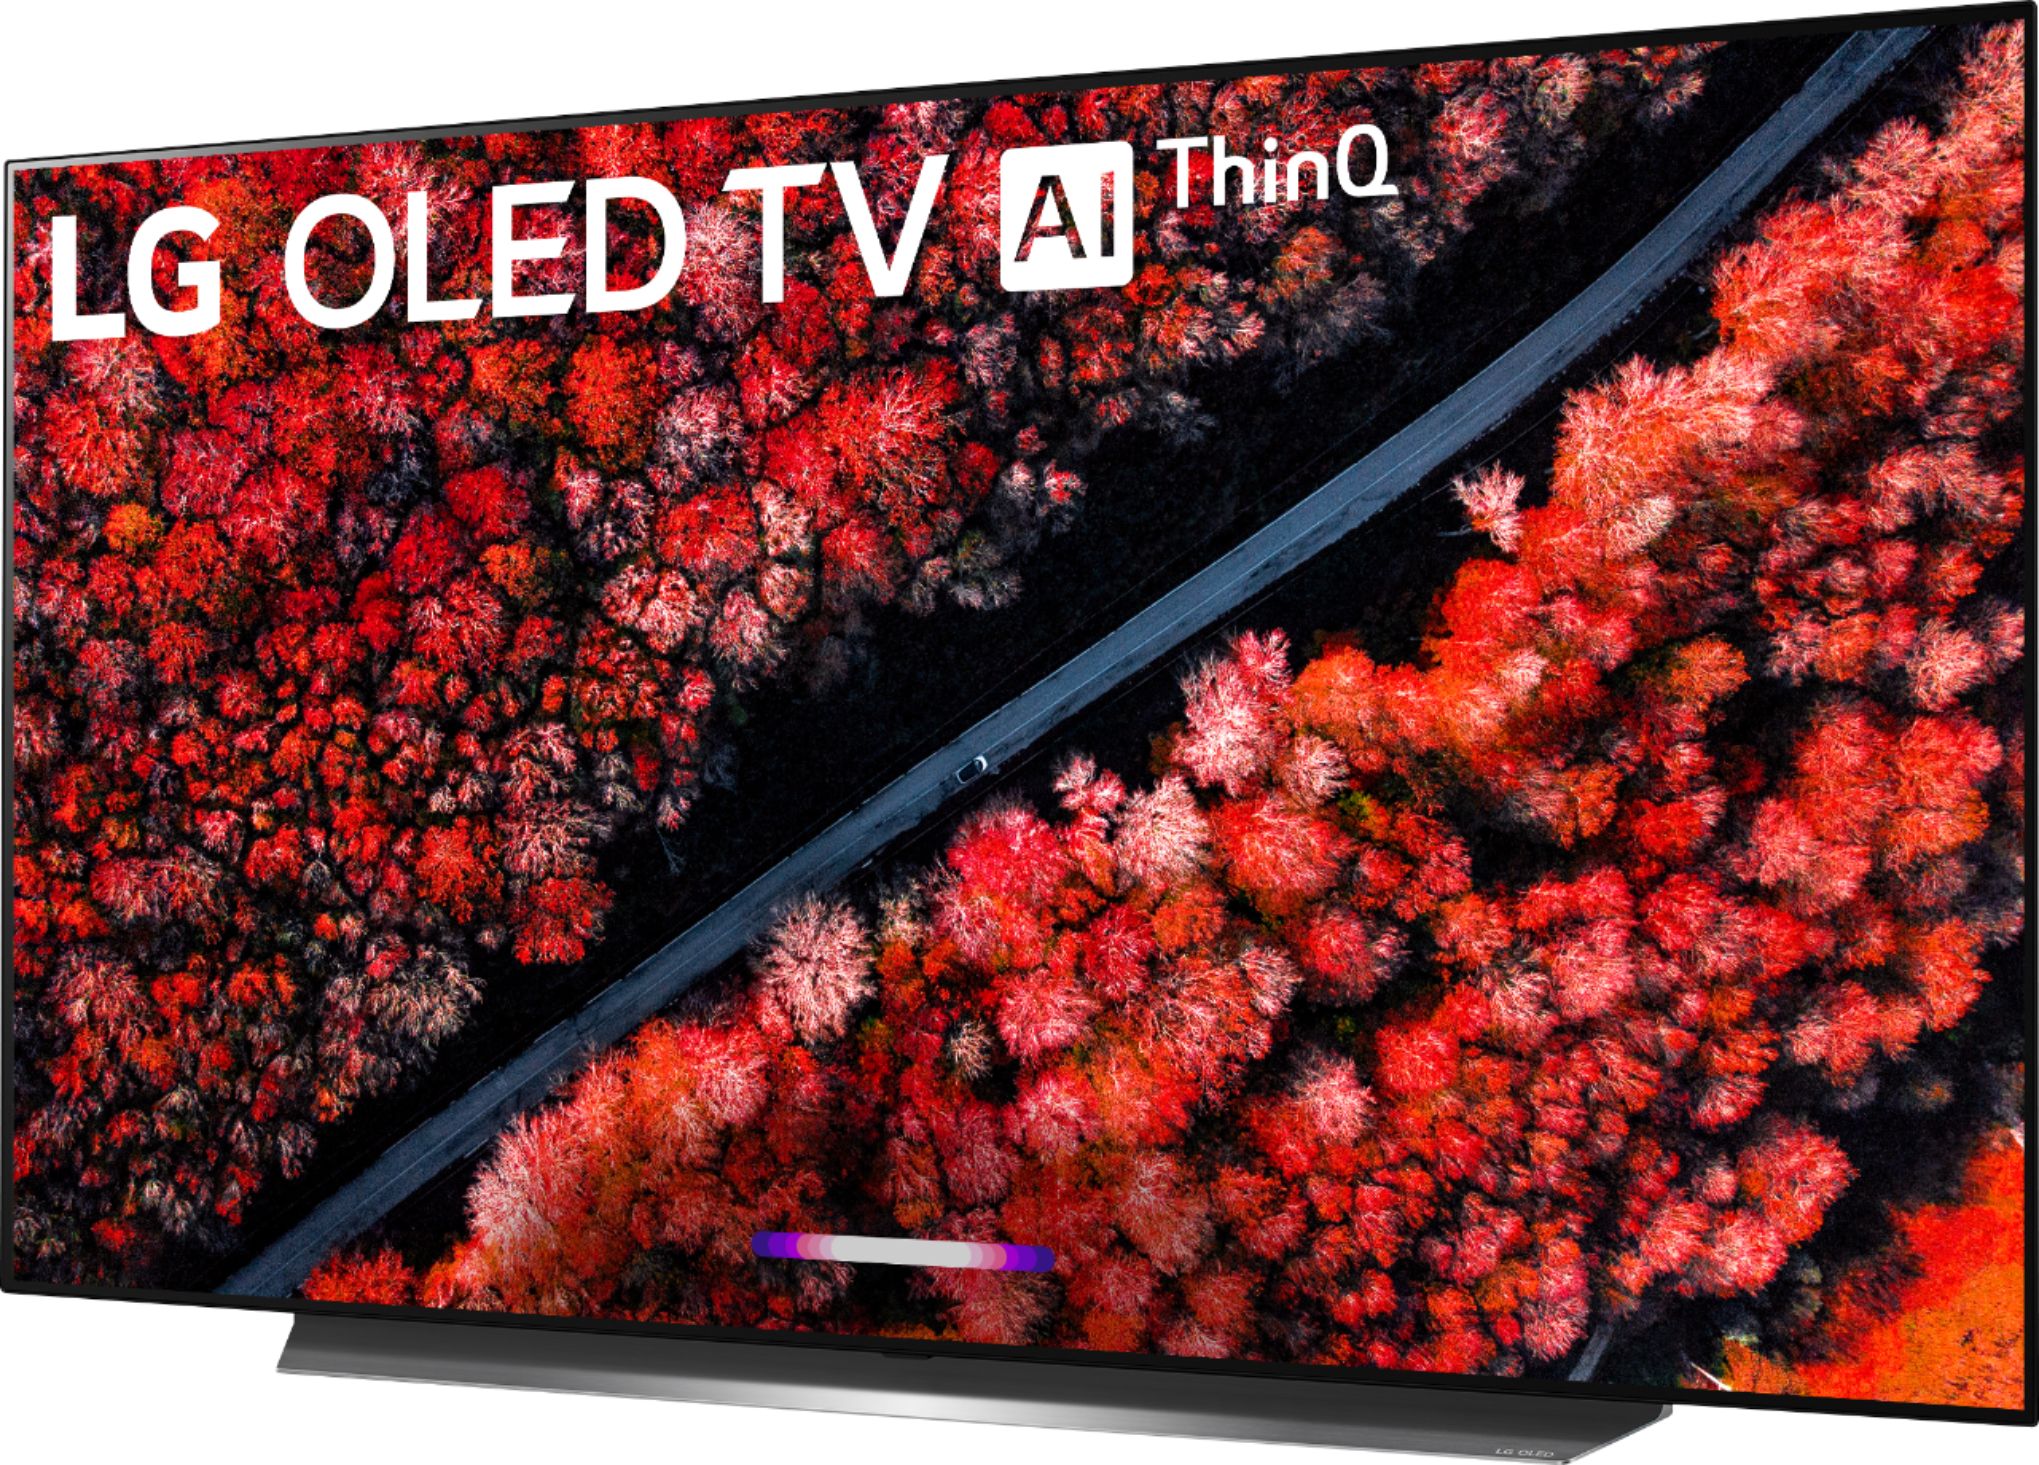 4k/Ultra HD/OLED TV'S